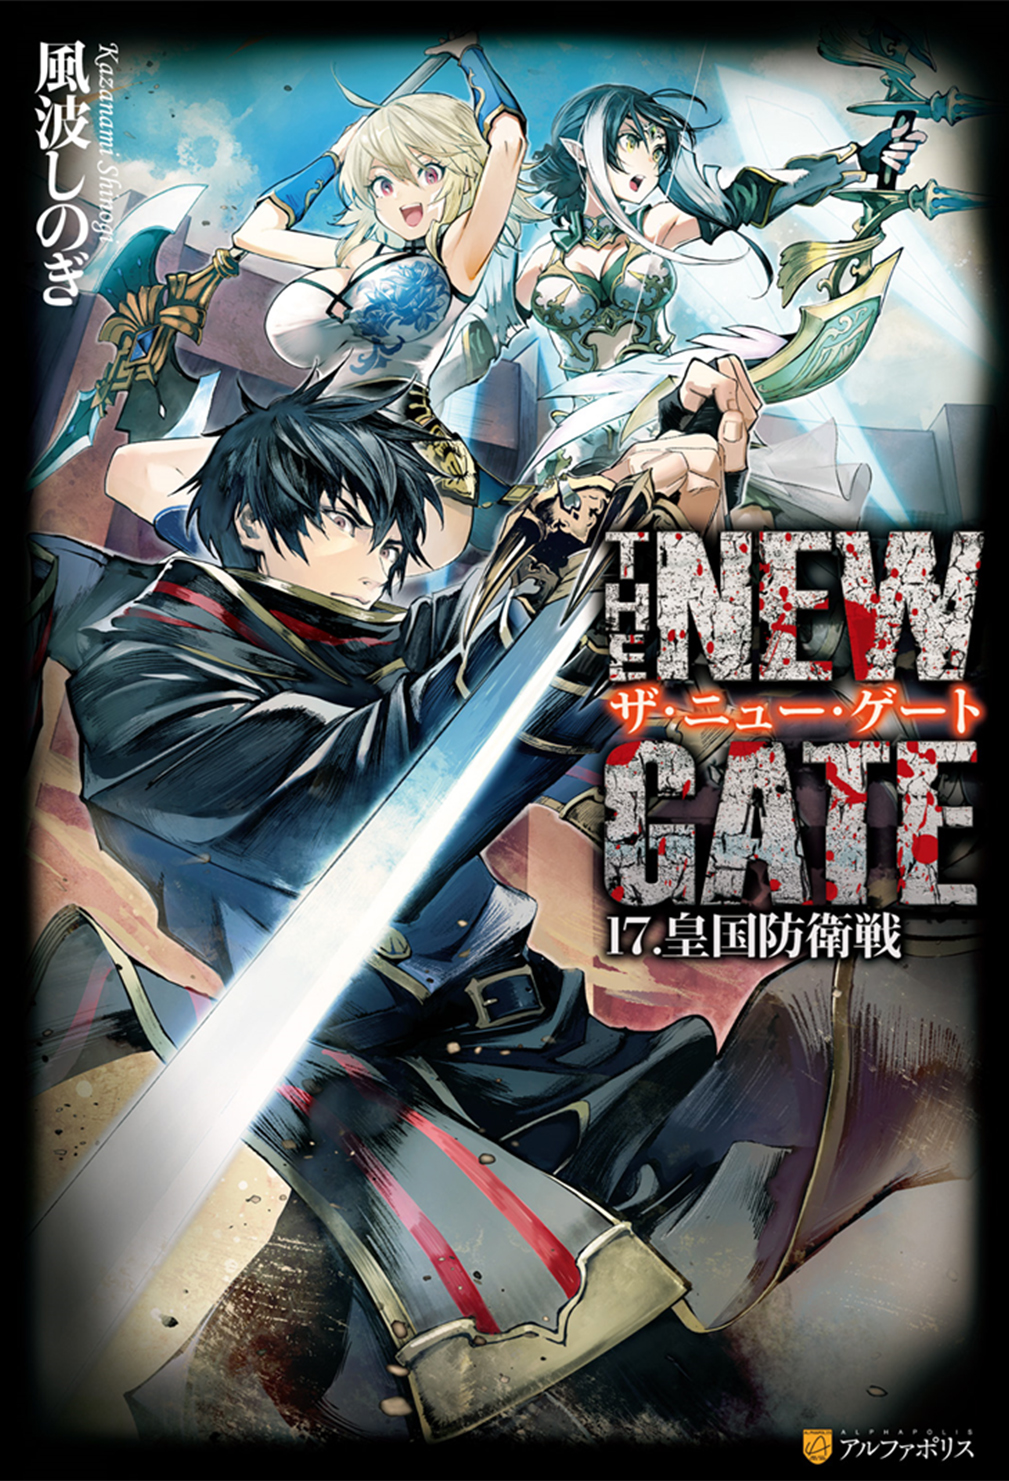 THE NEW GATE Vol. 17 Side Story Part 2 – Shin Translations